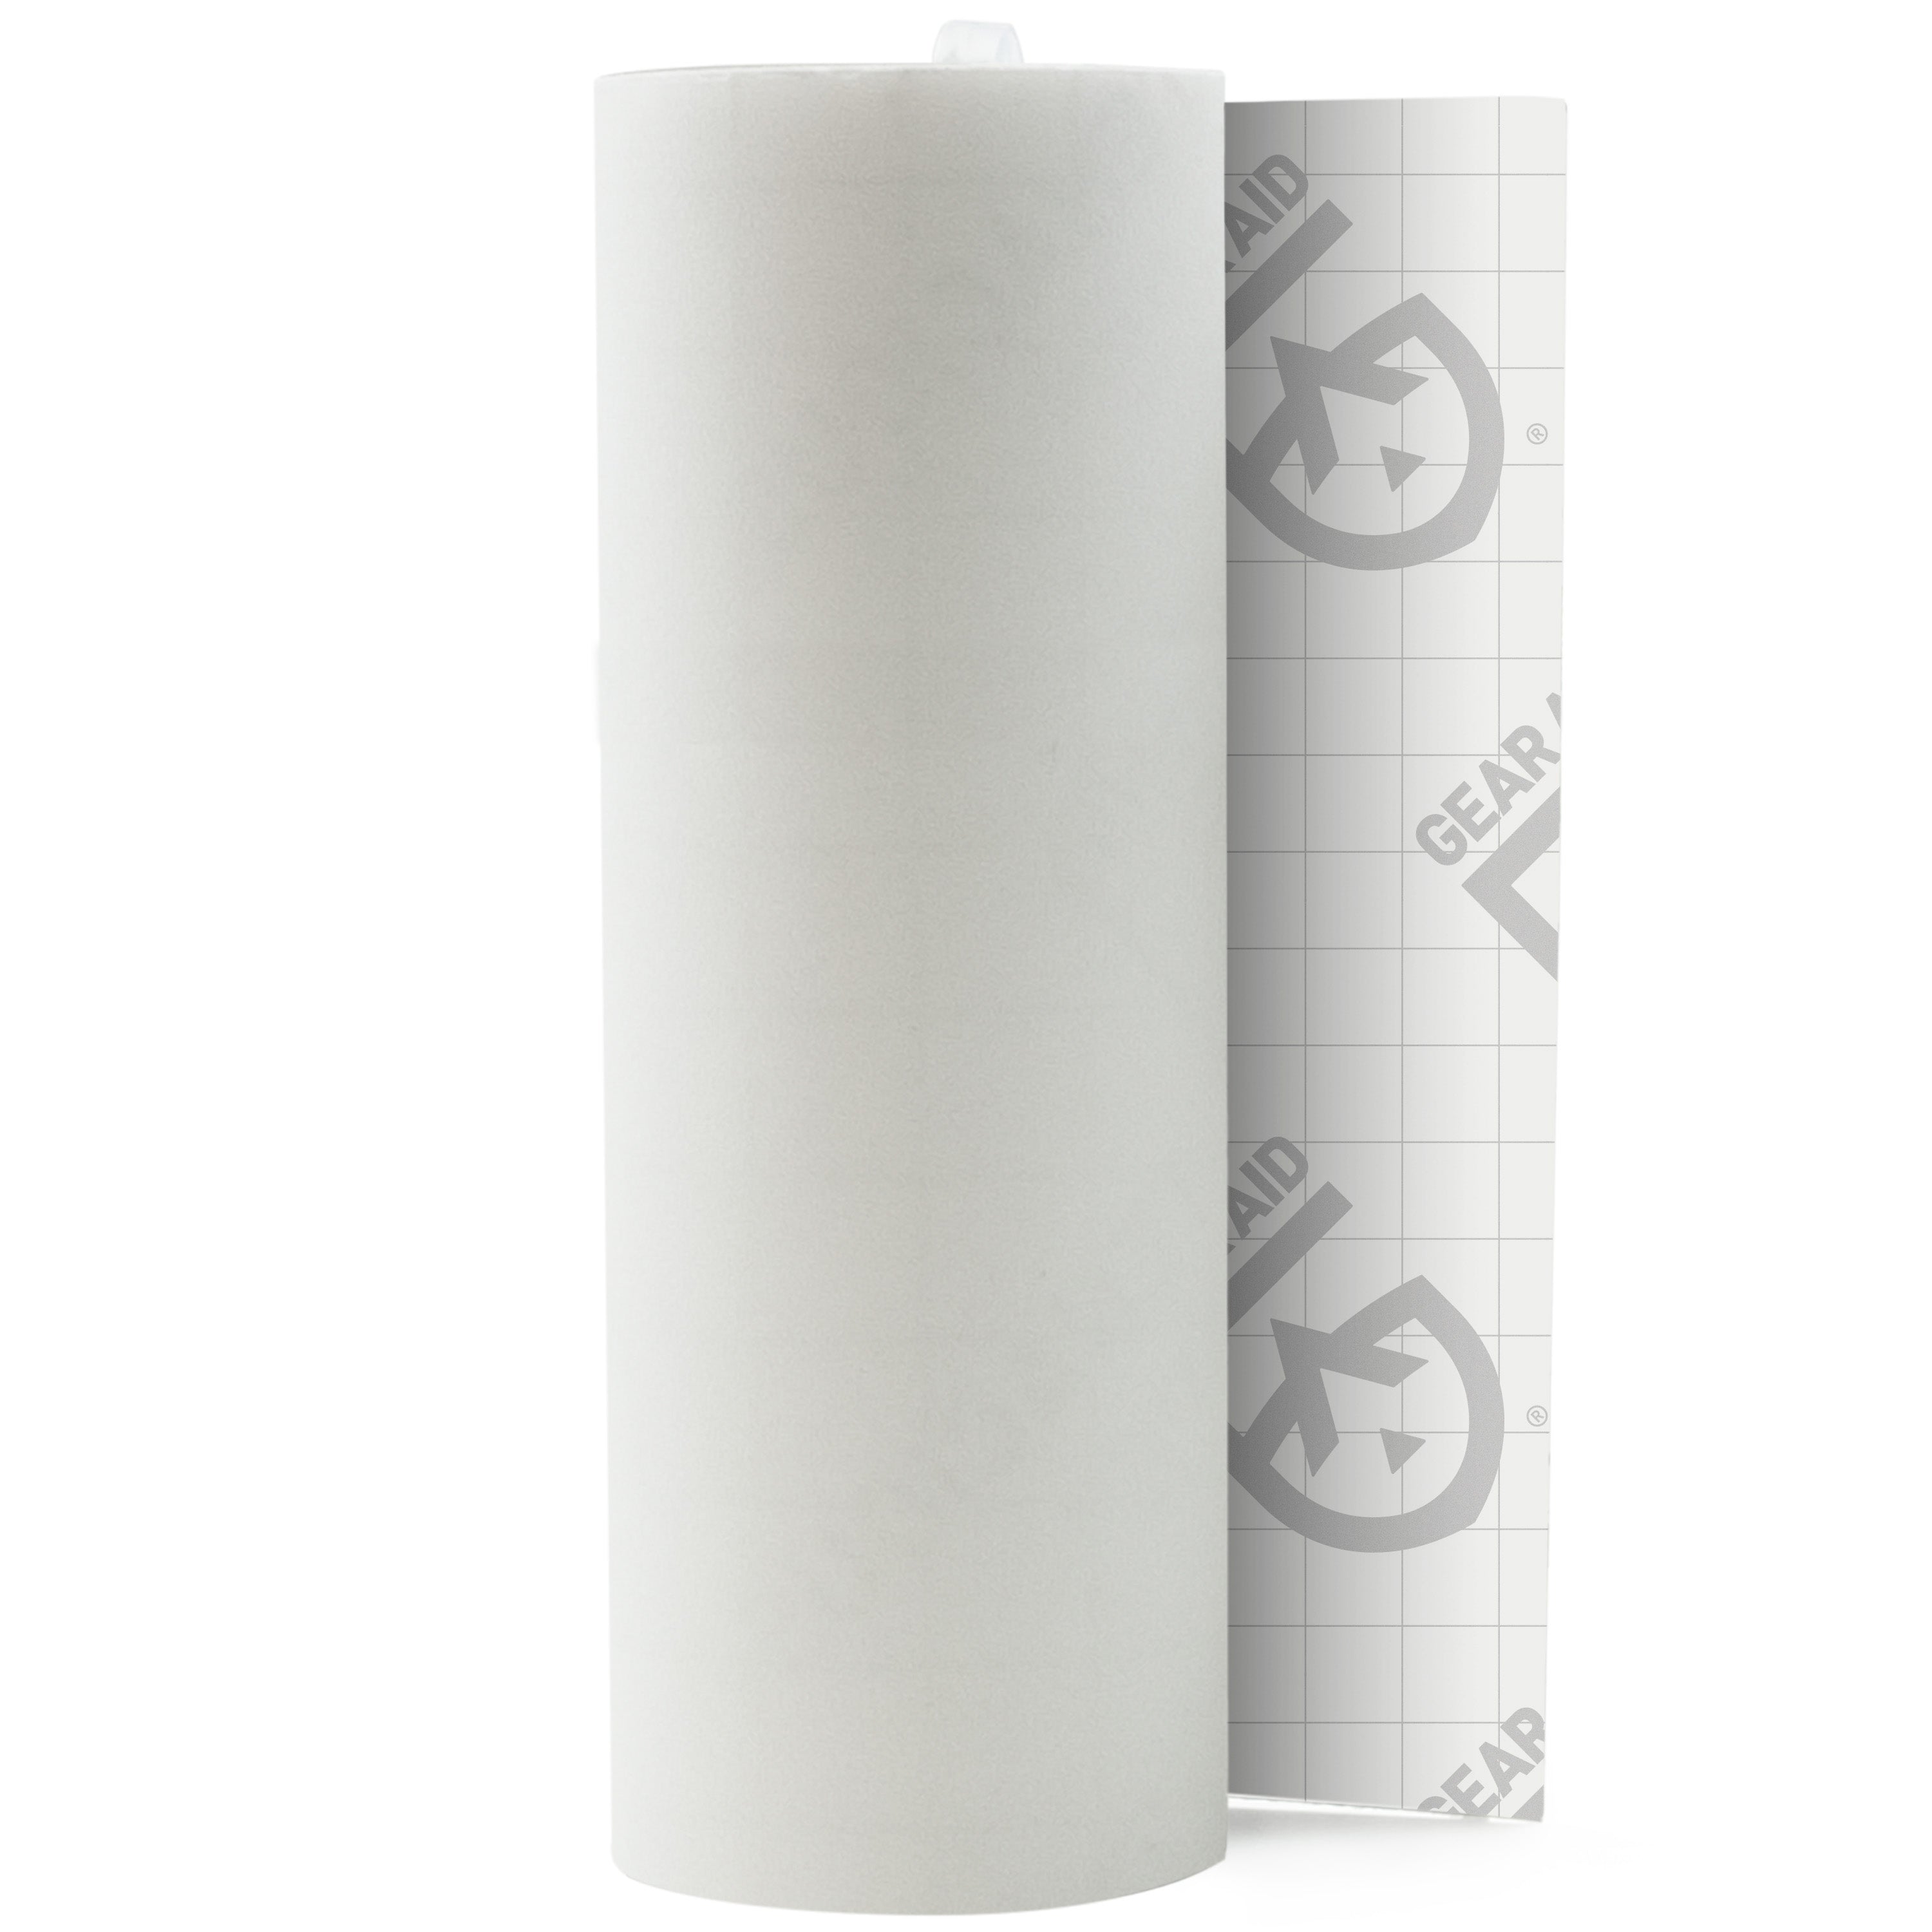 GEAR AID Tenacious Tape Ripstop Nylon Repair Tape for Fabric and Vinyl, 3”  x 20”